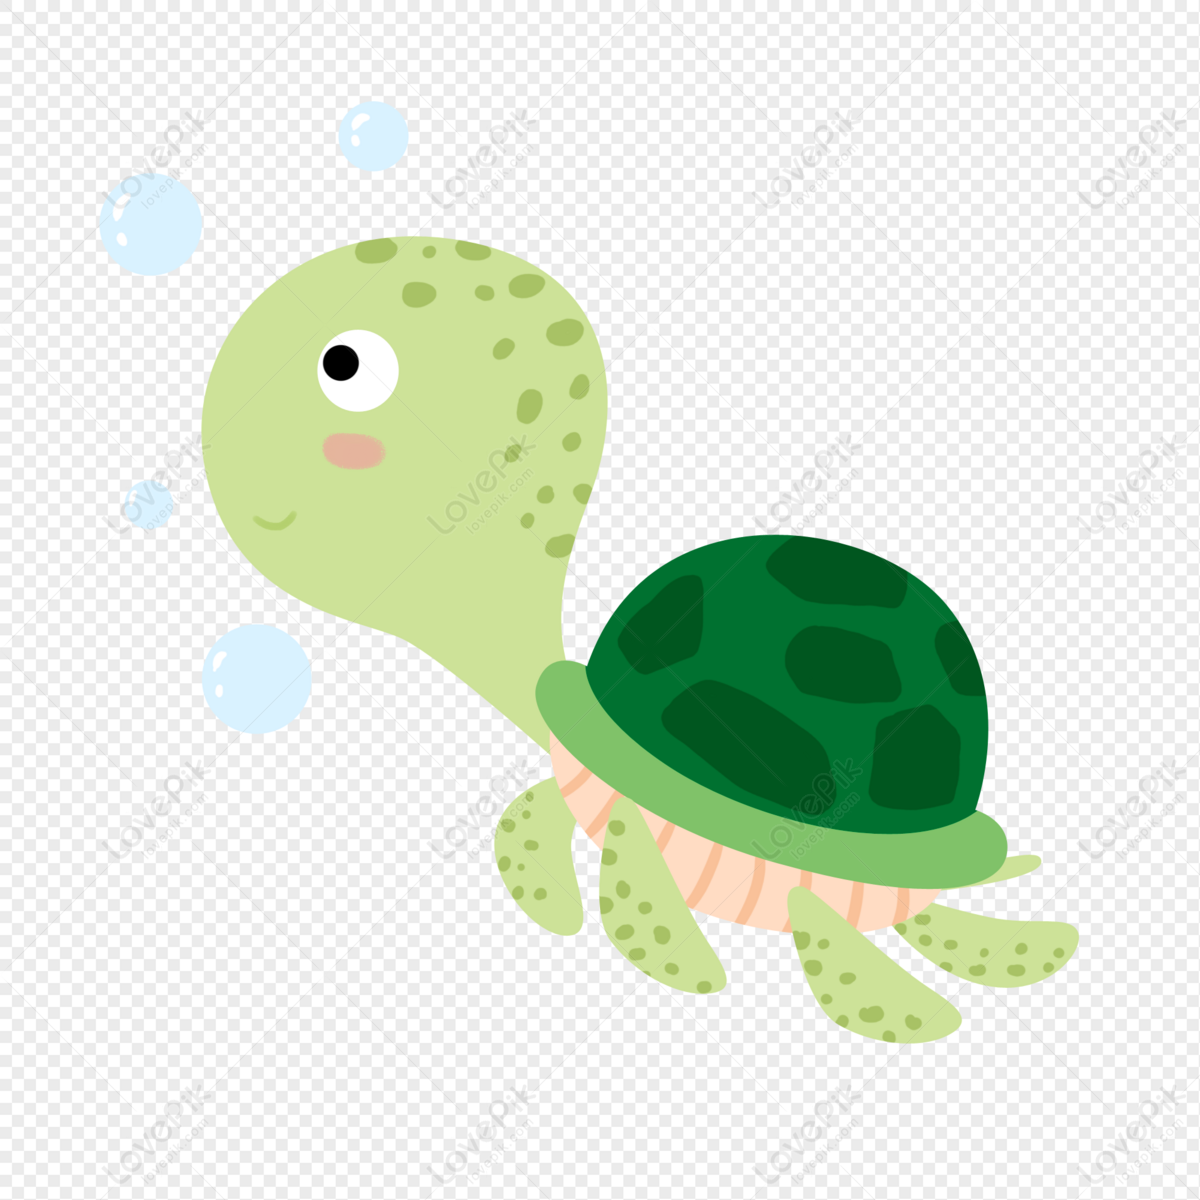 Free Walking Turtle Cartoon Image｜Charatoon